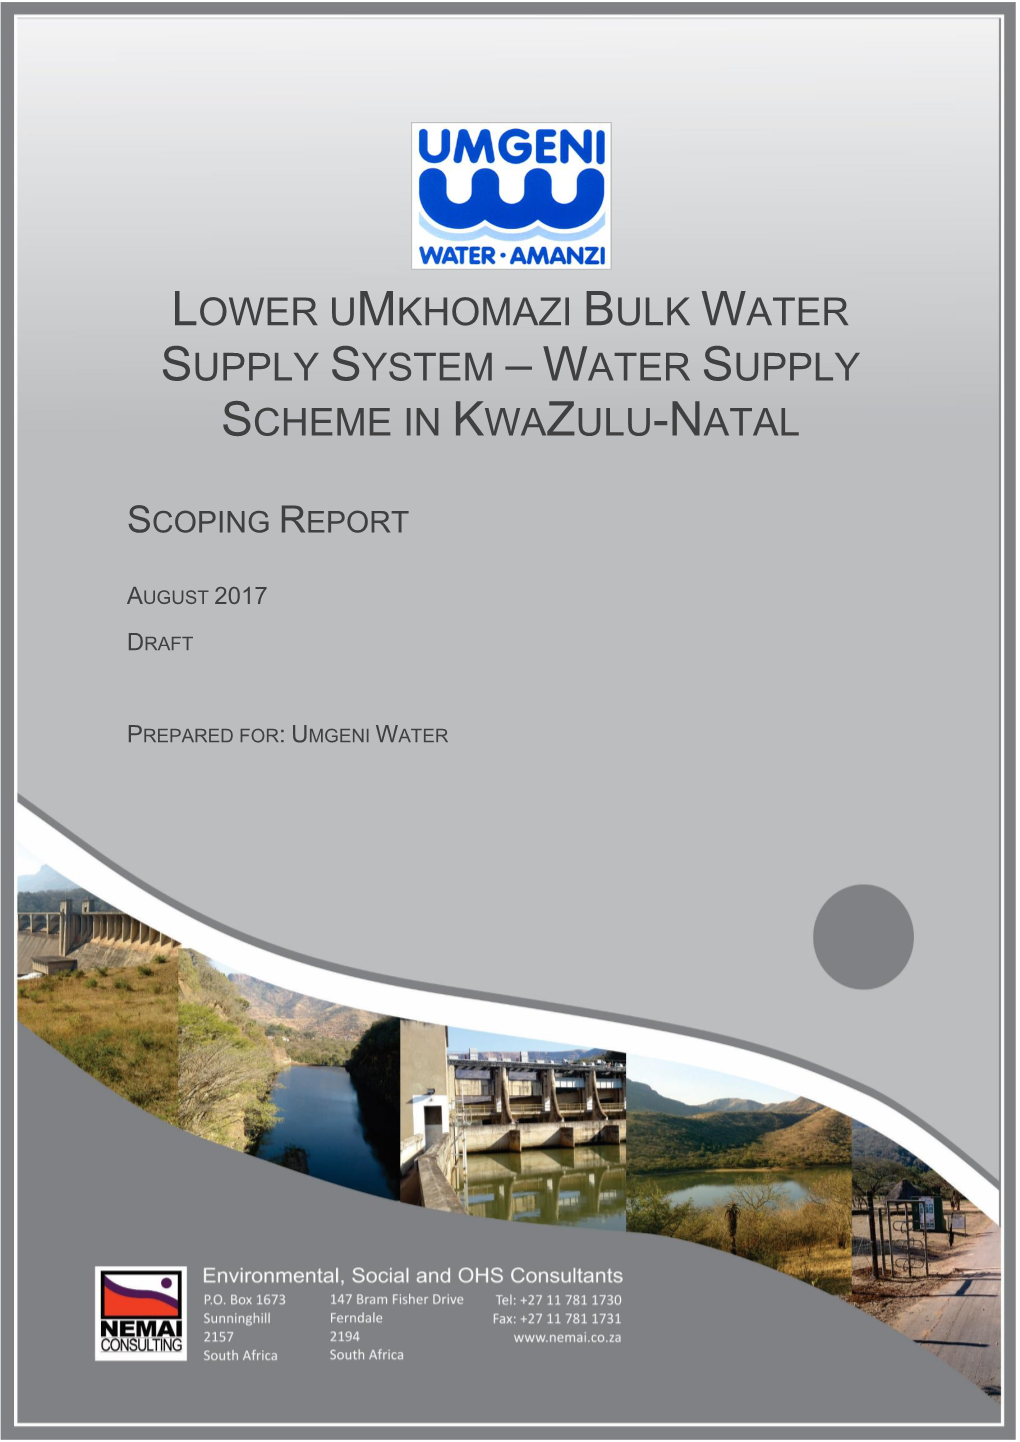 Lower Umkhomazi Bulk Water Supply System – Water Supply Scheme in Kwazulu-Natal